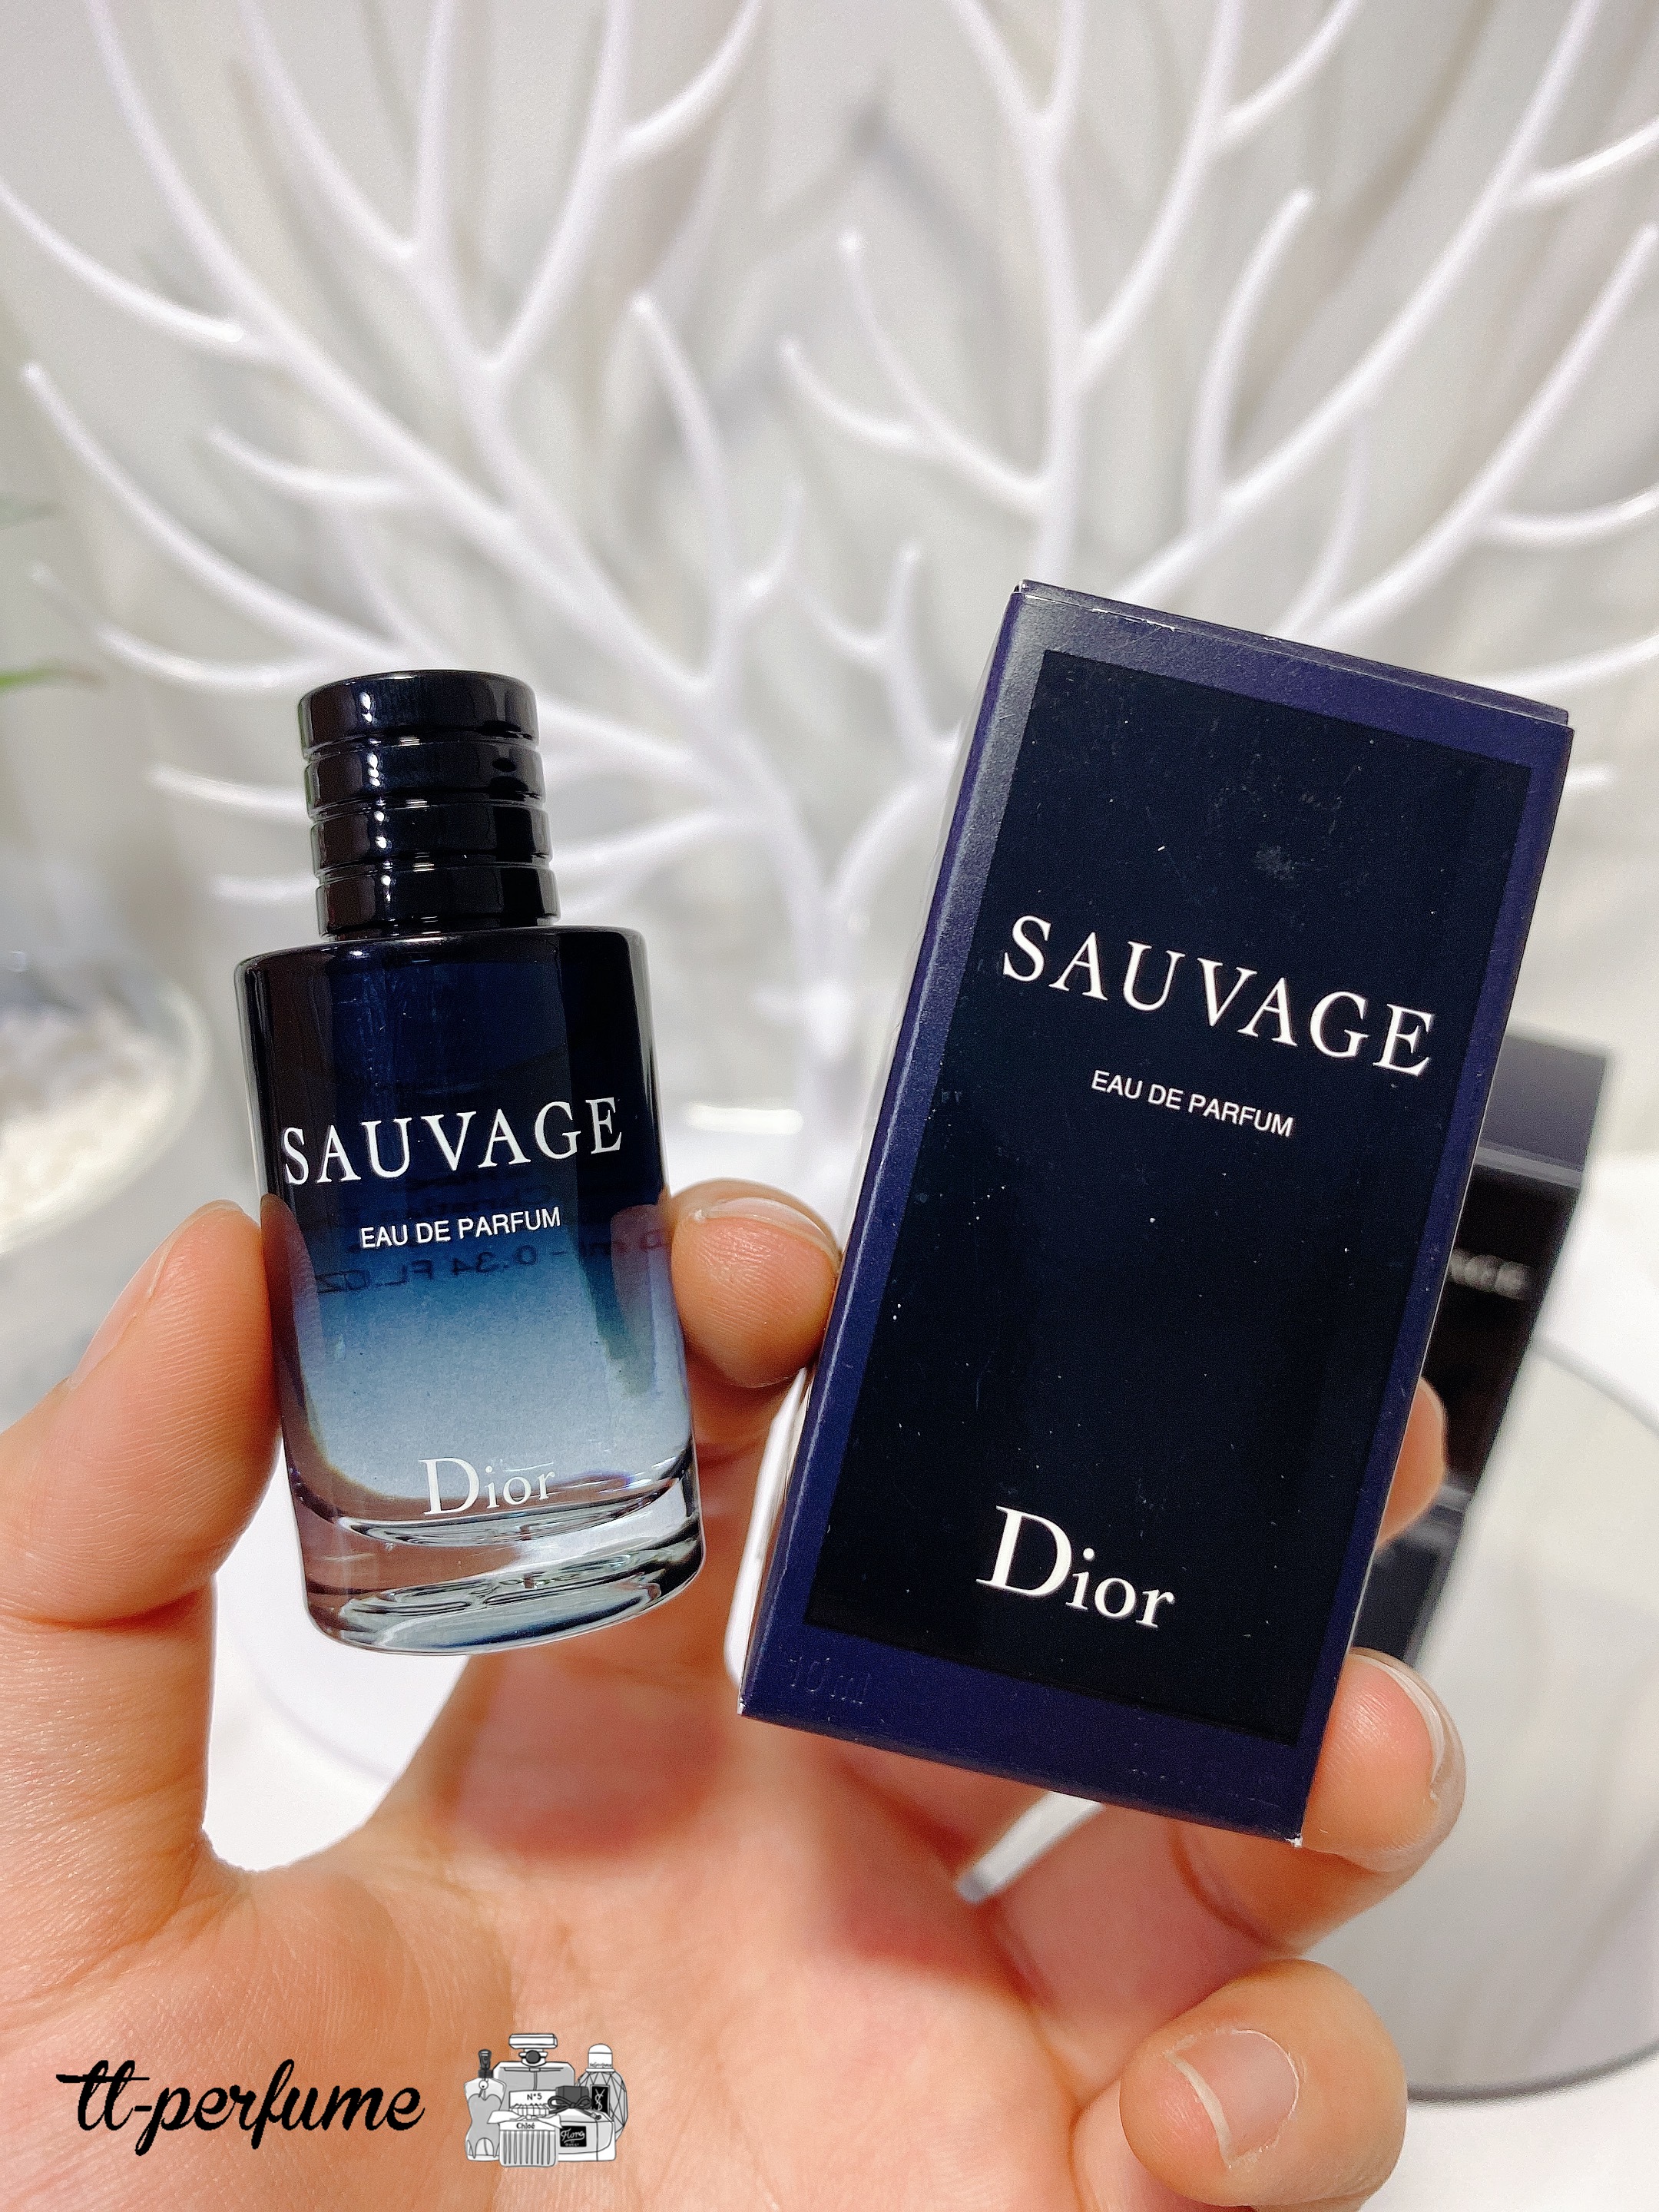 Nước hoa Dior Sauvage Review giá bao nhiêu mua ở đâu